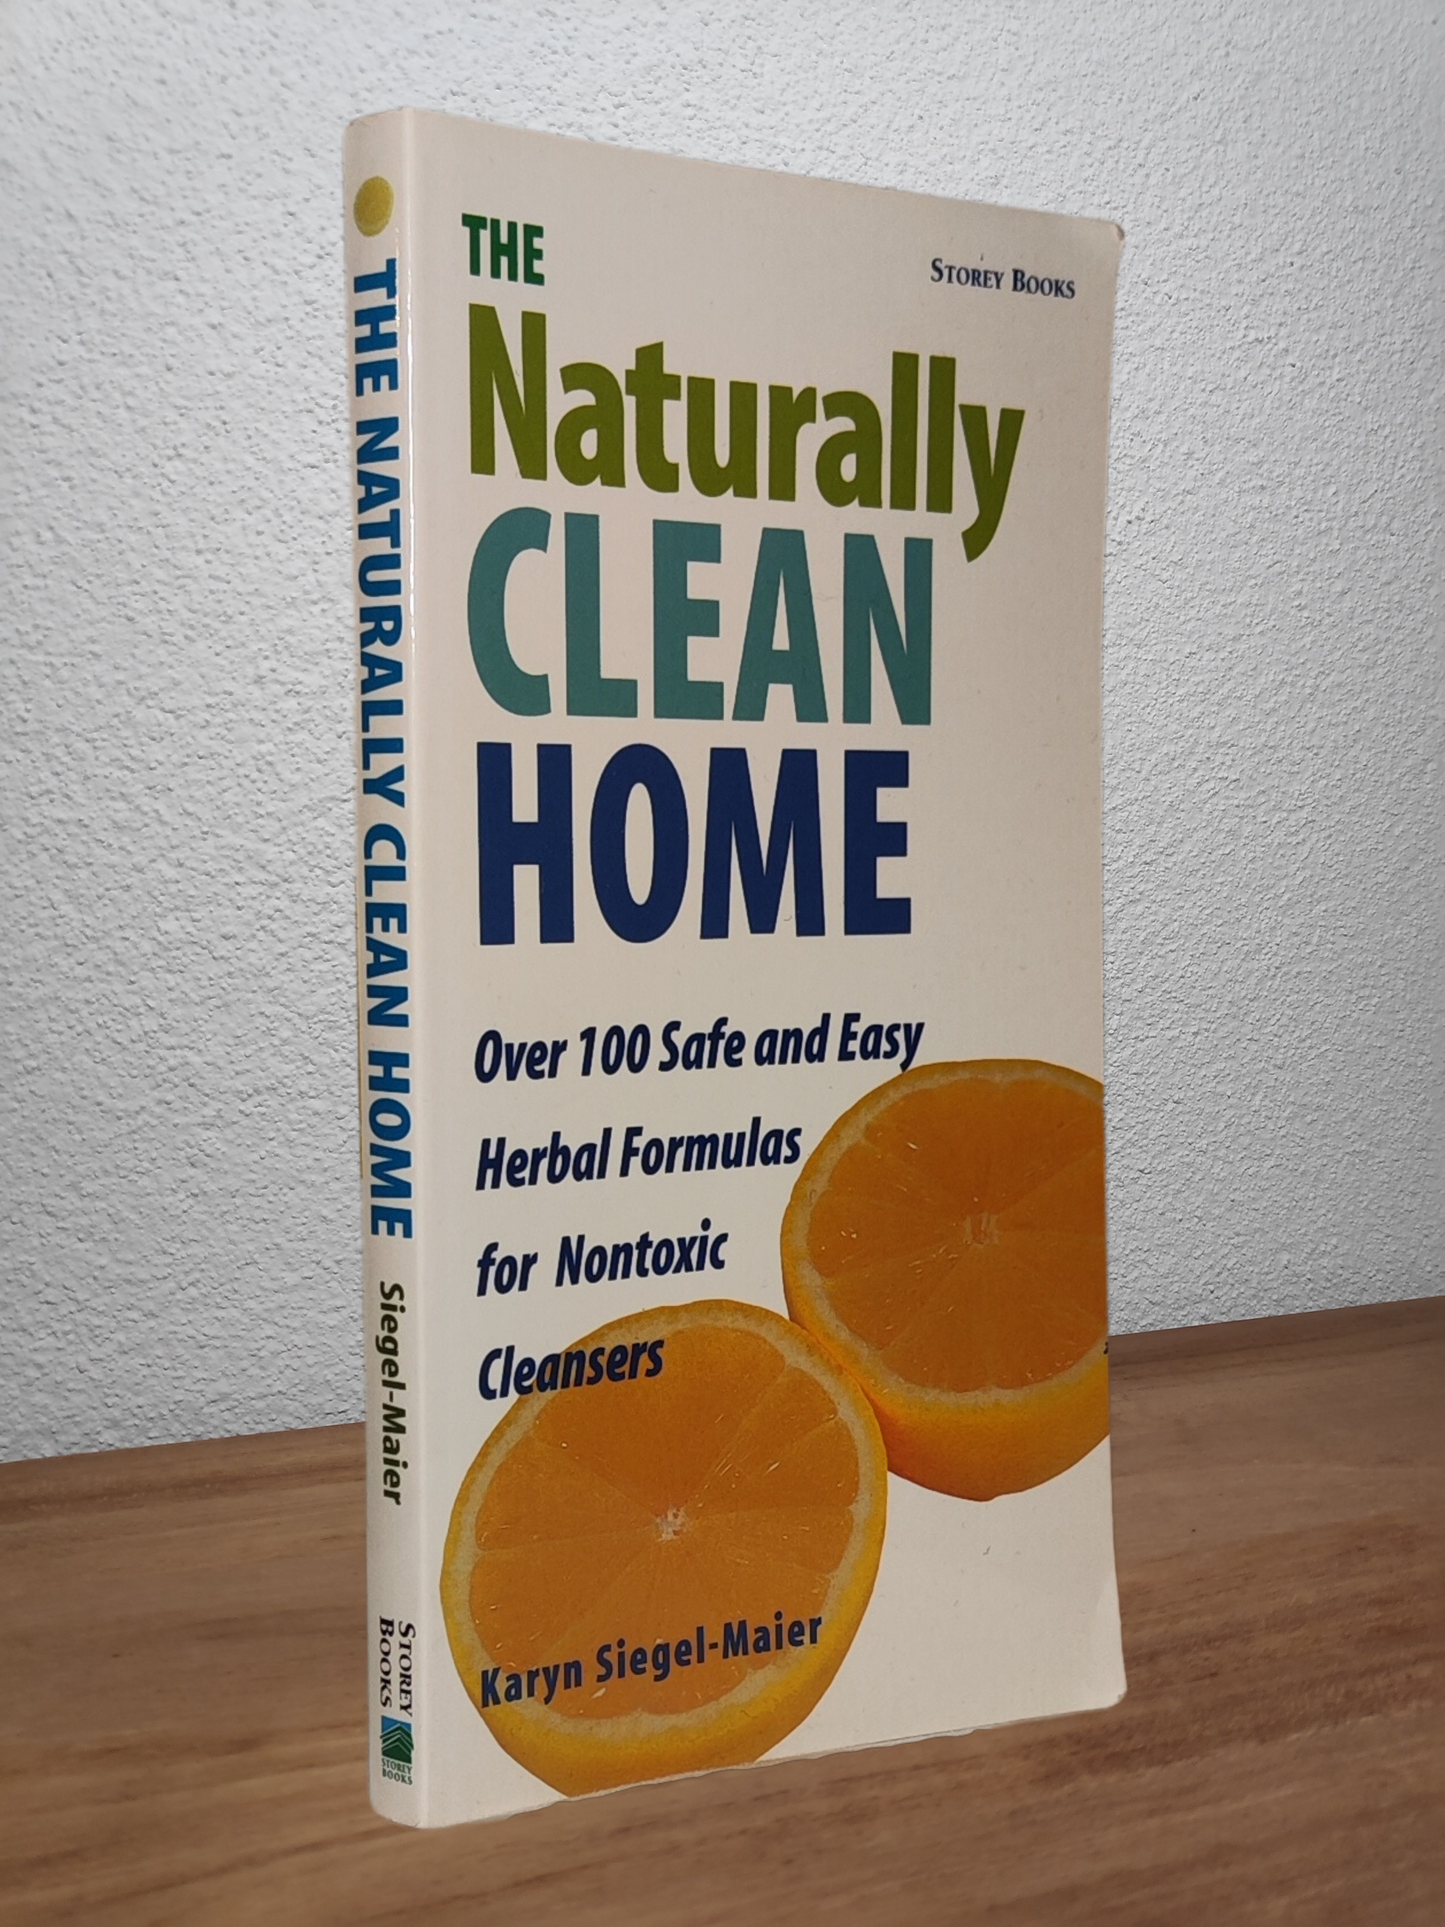 Karyn Siegel-Maier - The Naturally Clean Home  - Second-hand english book to deliver in Zurich & Switzerland